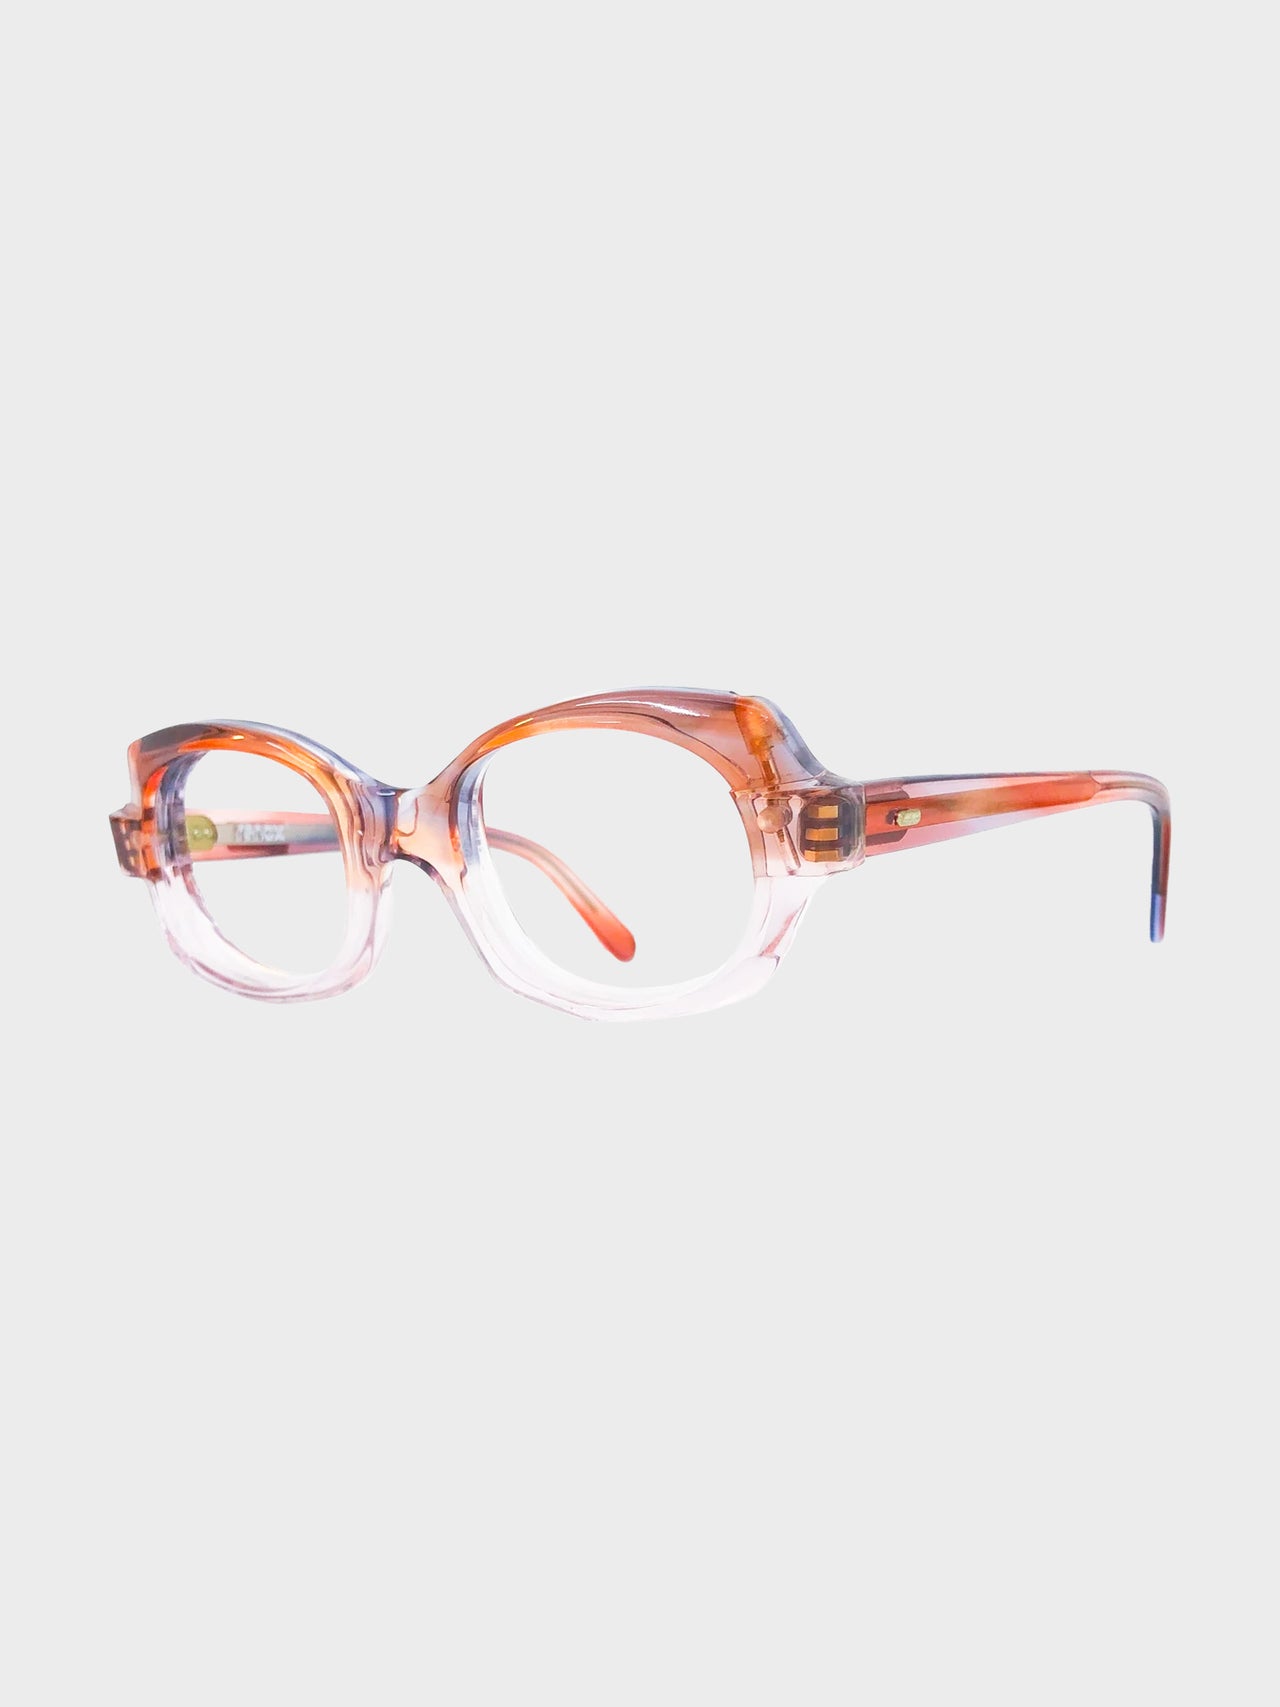 FRENCH VINTAGE / Clear glasses (PINK BROWN) #FV25